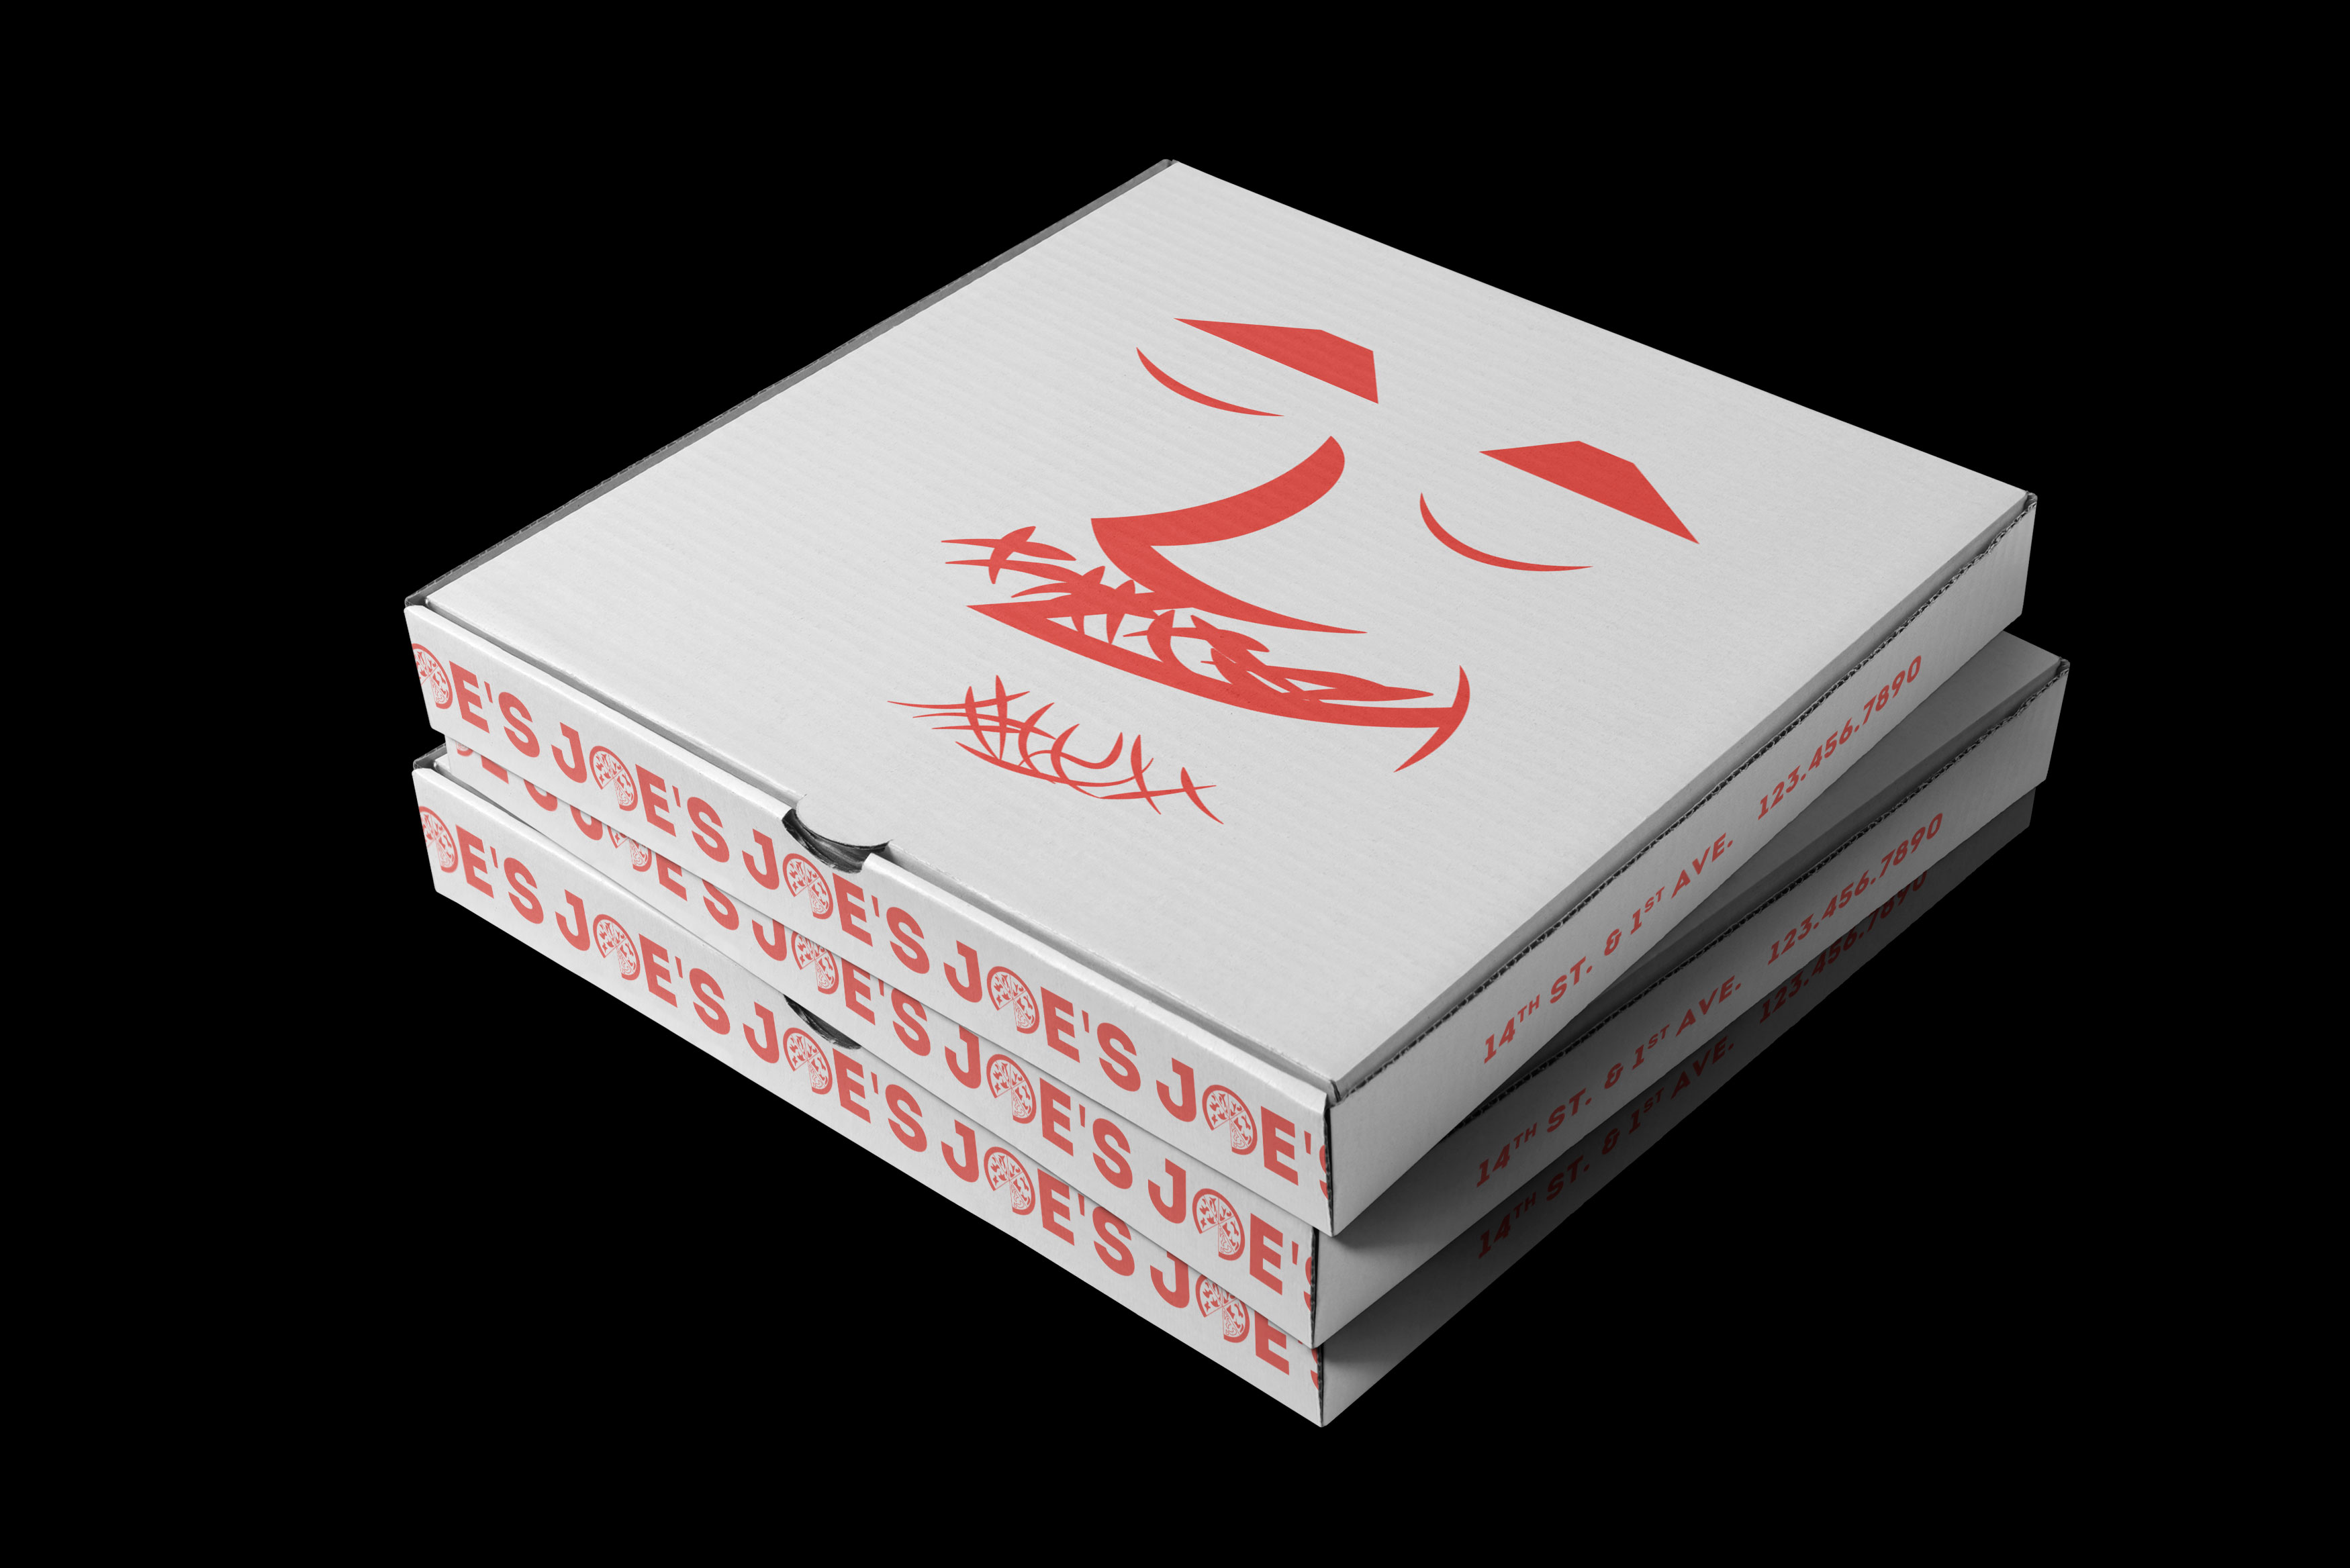 Pizza box mockups featuring the re-designed Joe's logo.